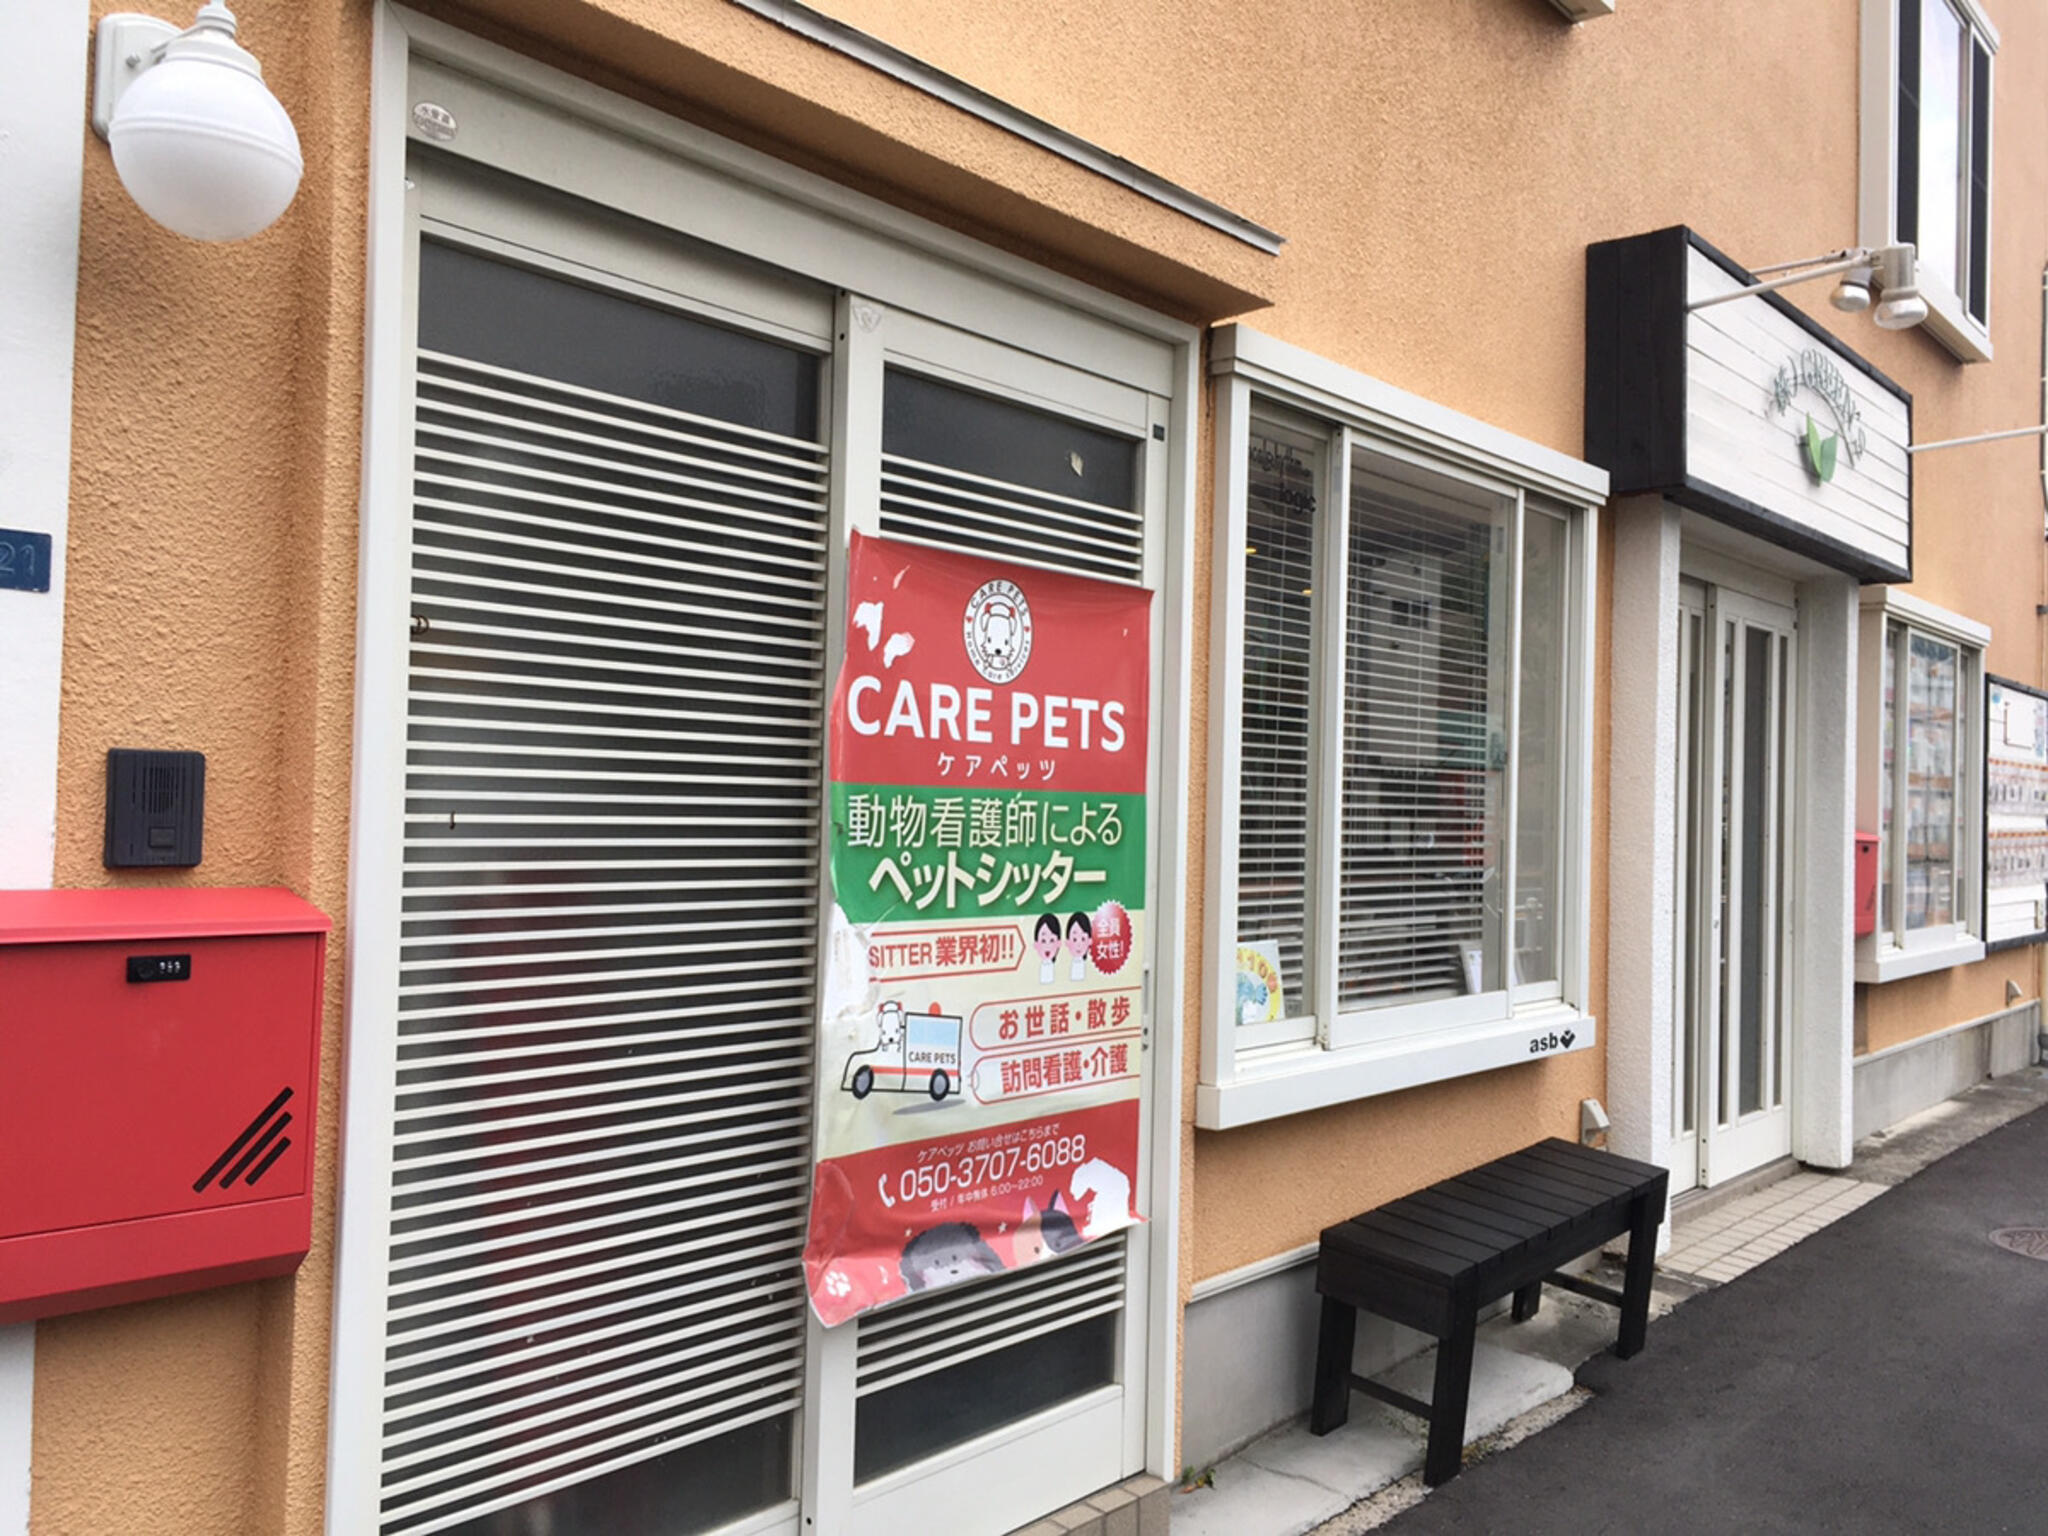 CARE PETS-ケアペッツ-藤沢店の代表写真3